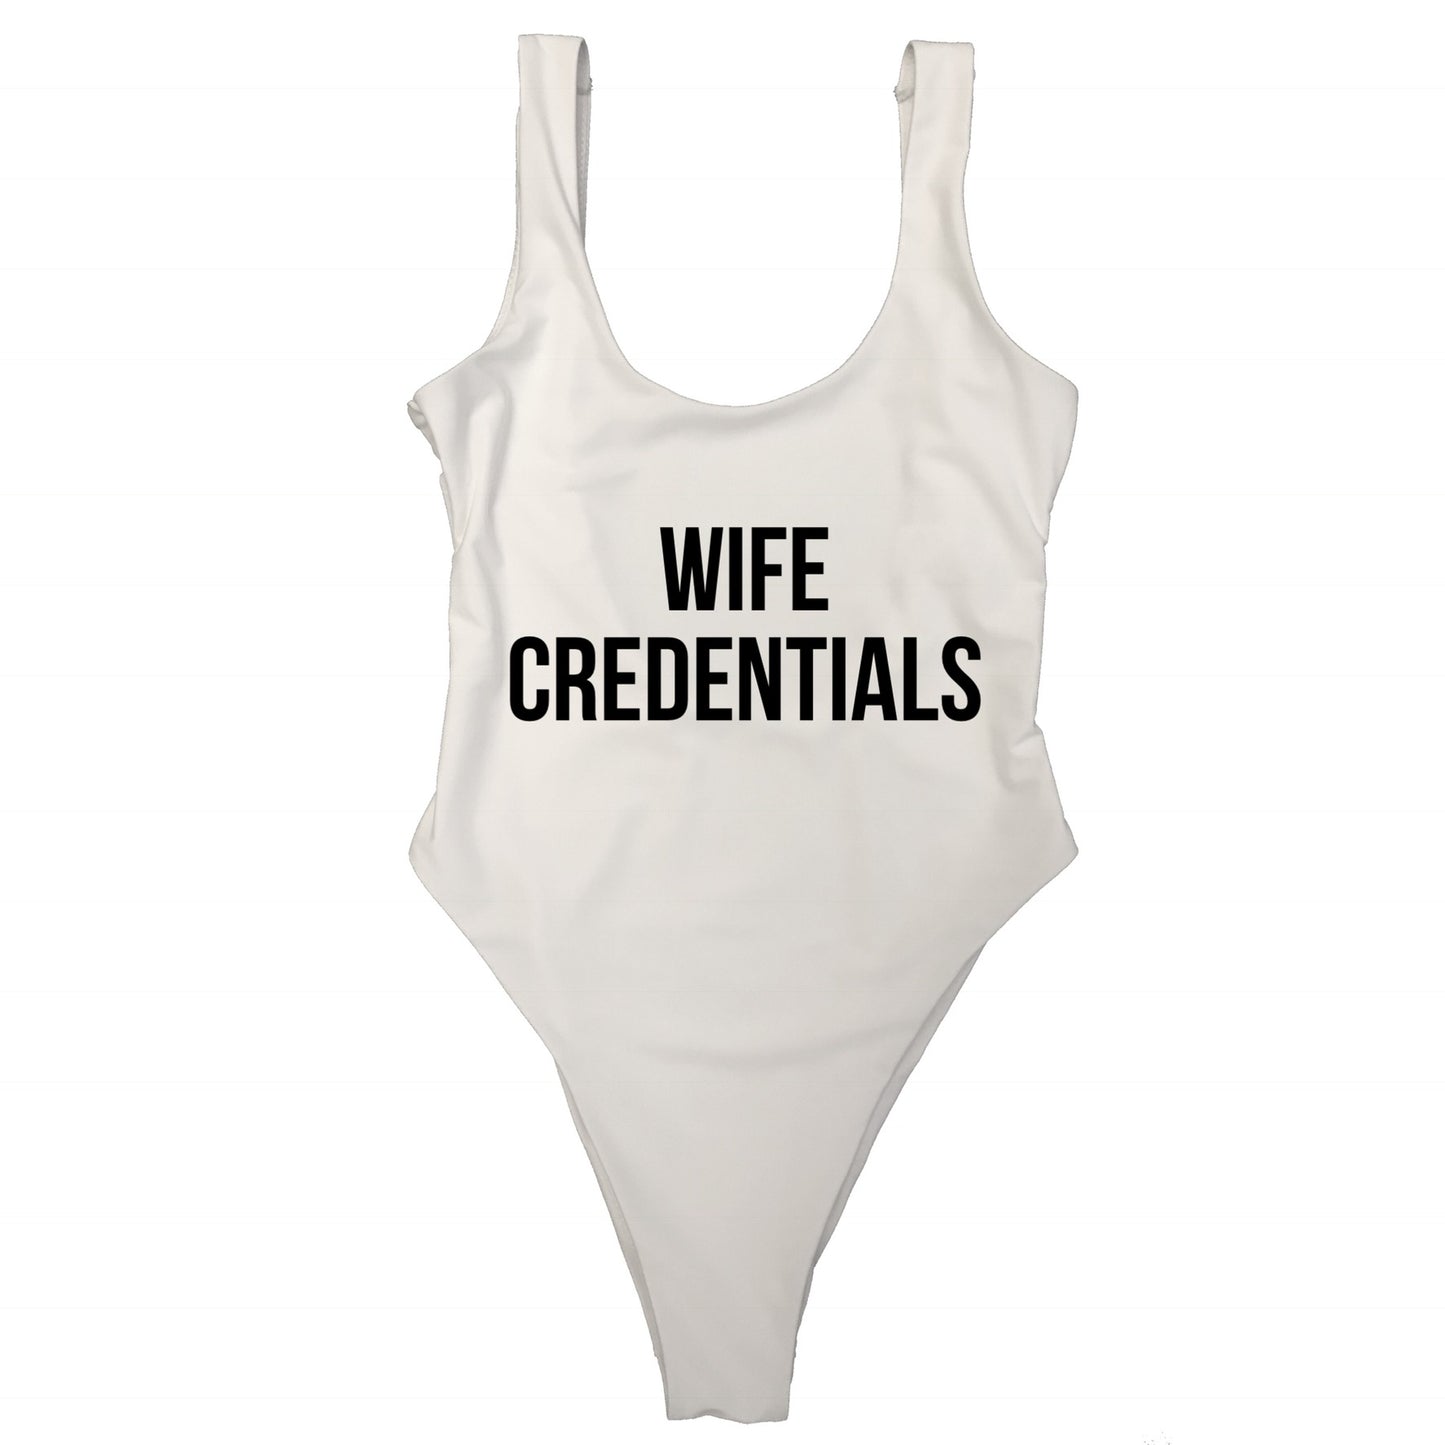 WIFE CREDENTIALS